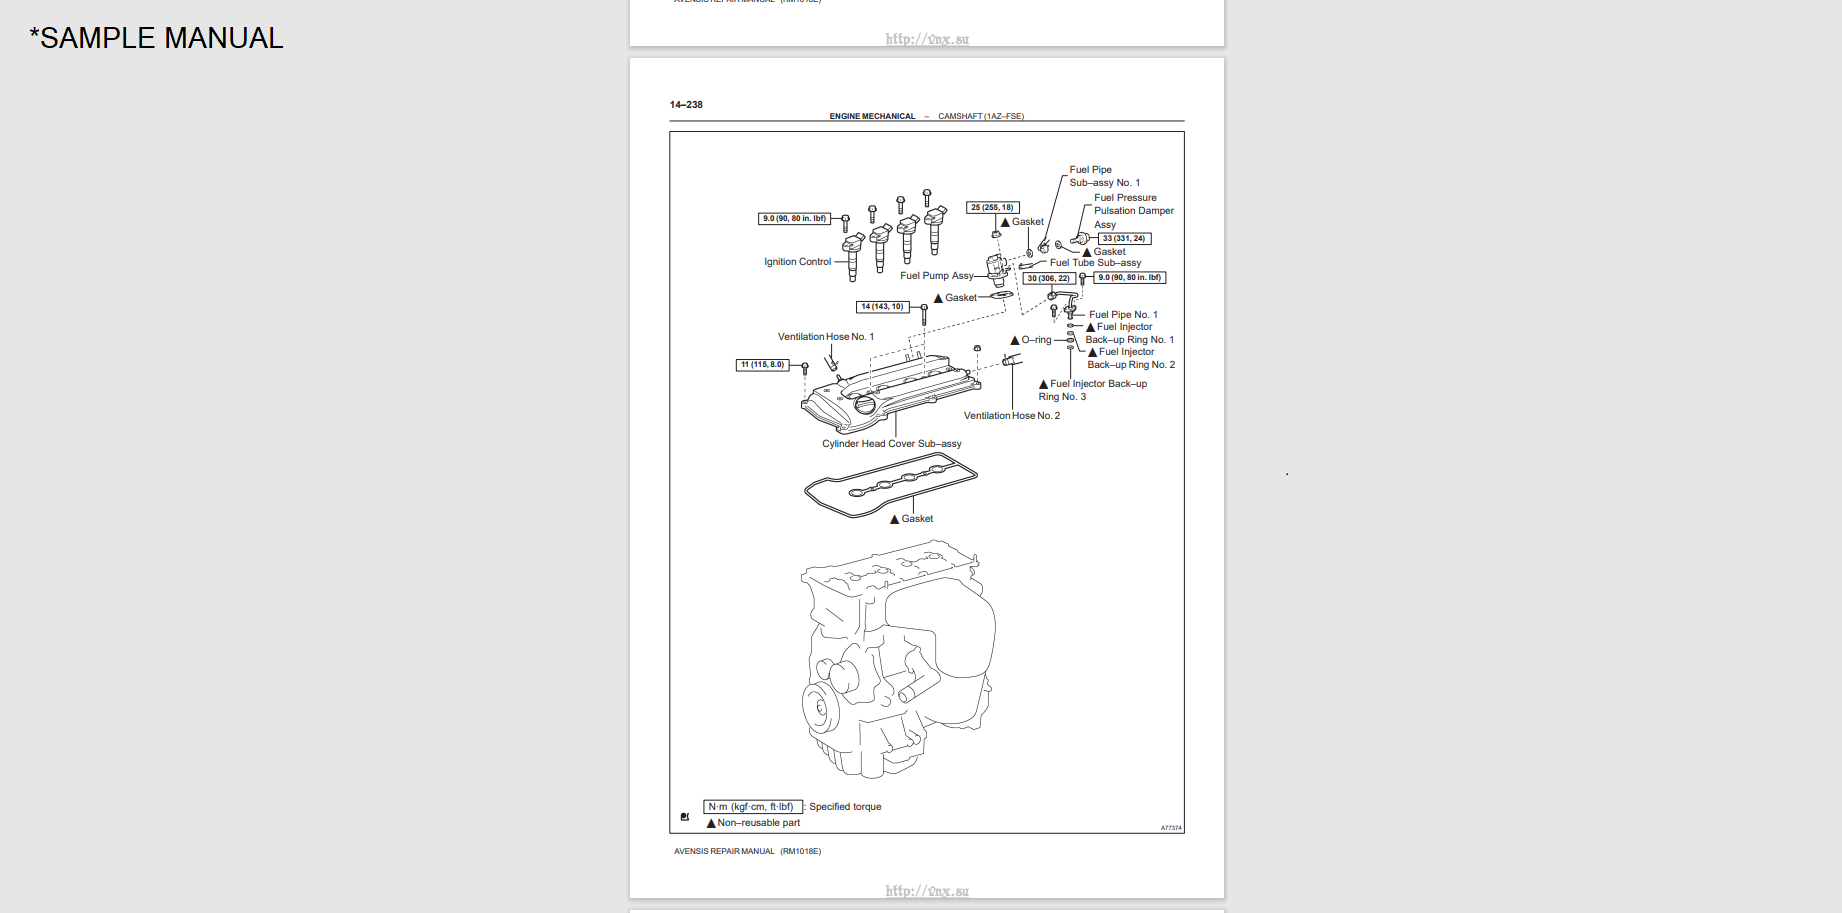 2009-2012 Kia Ceed Owner's Manual